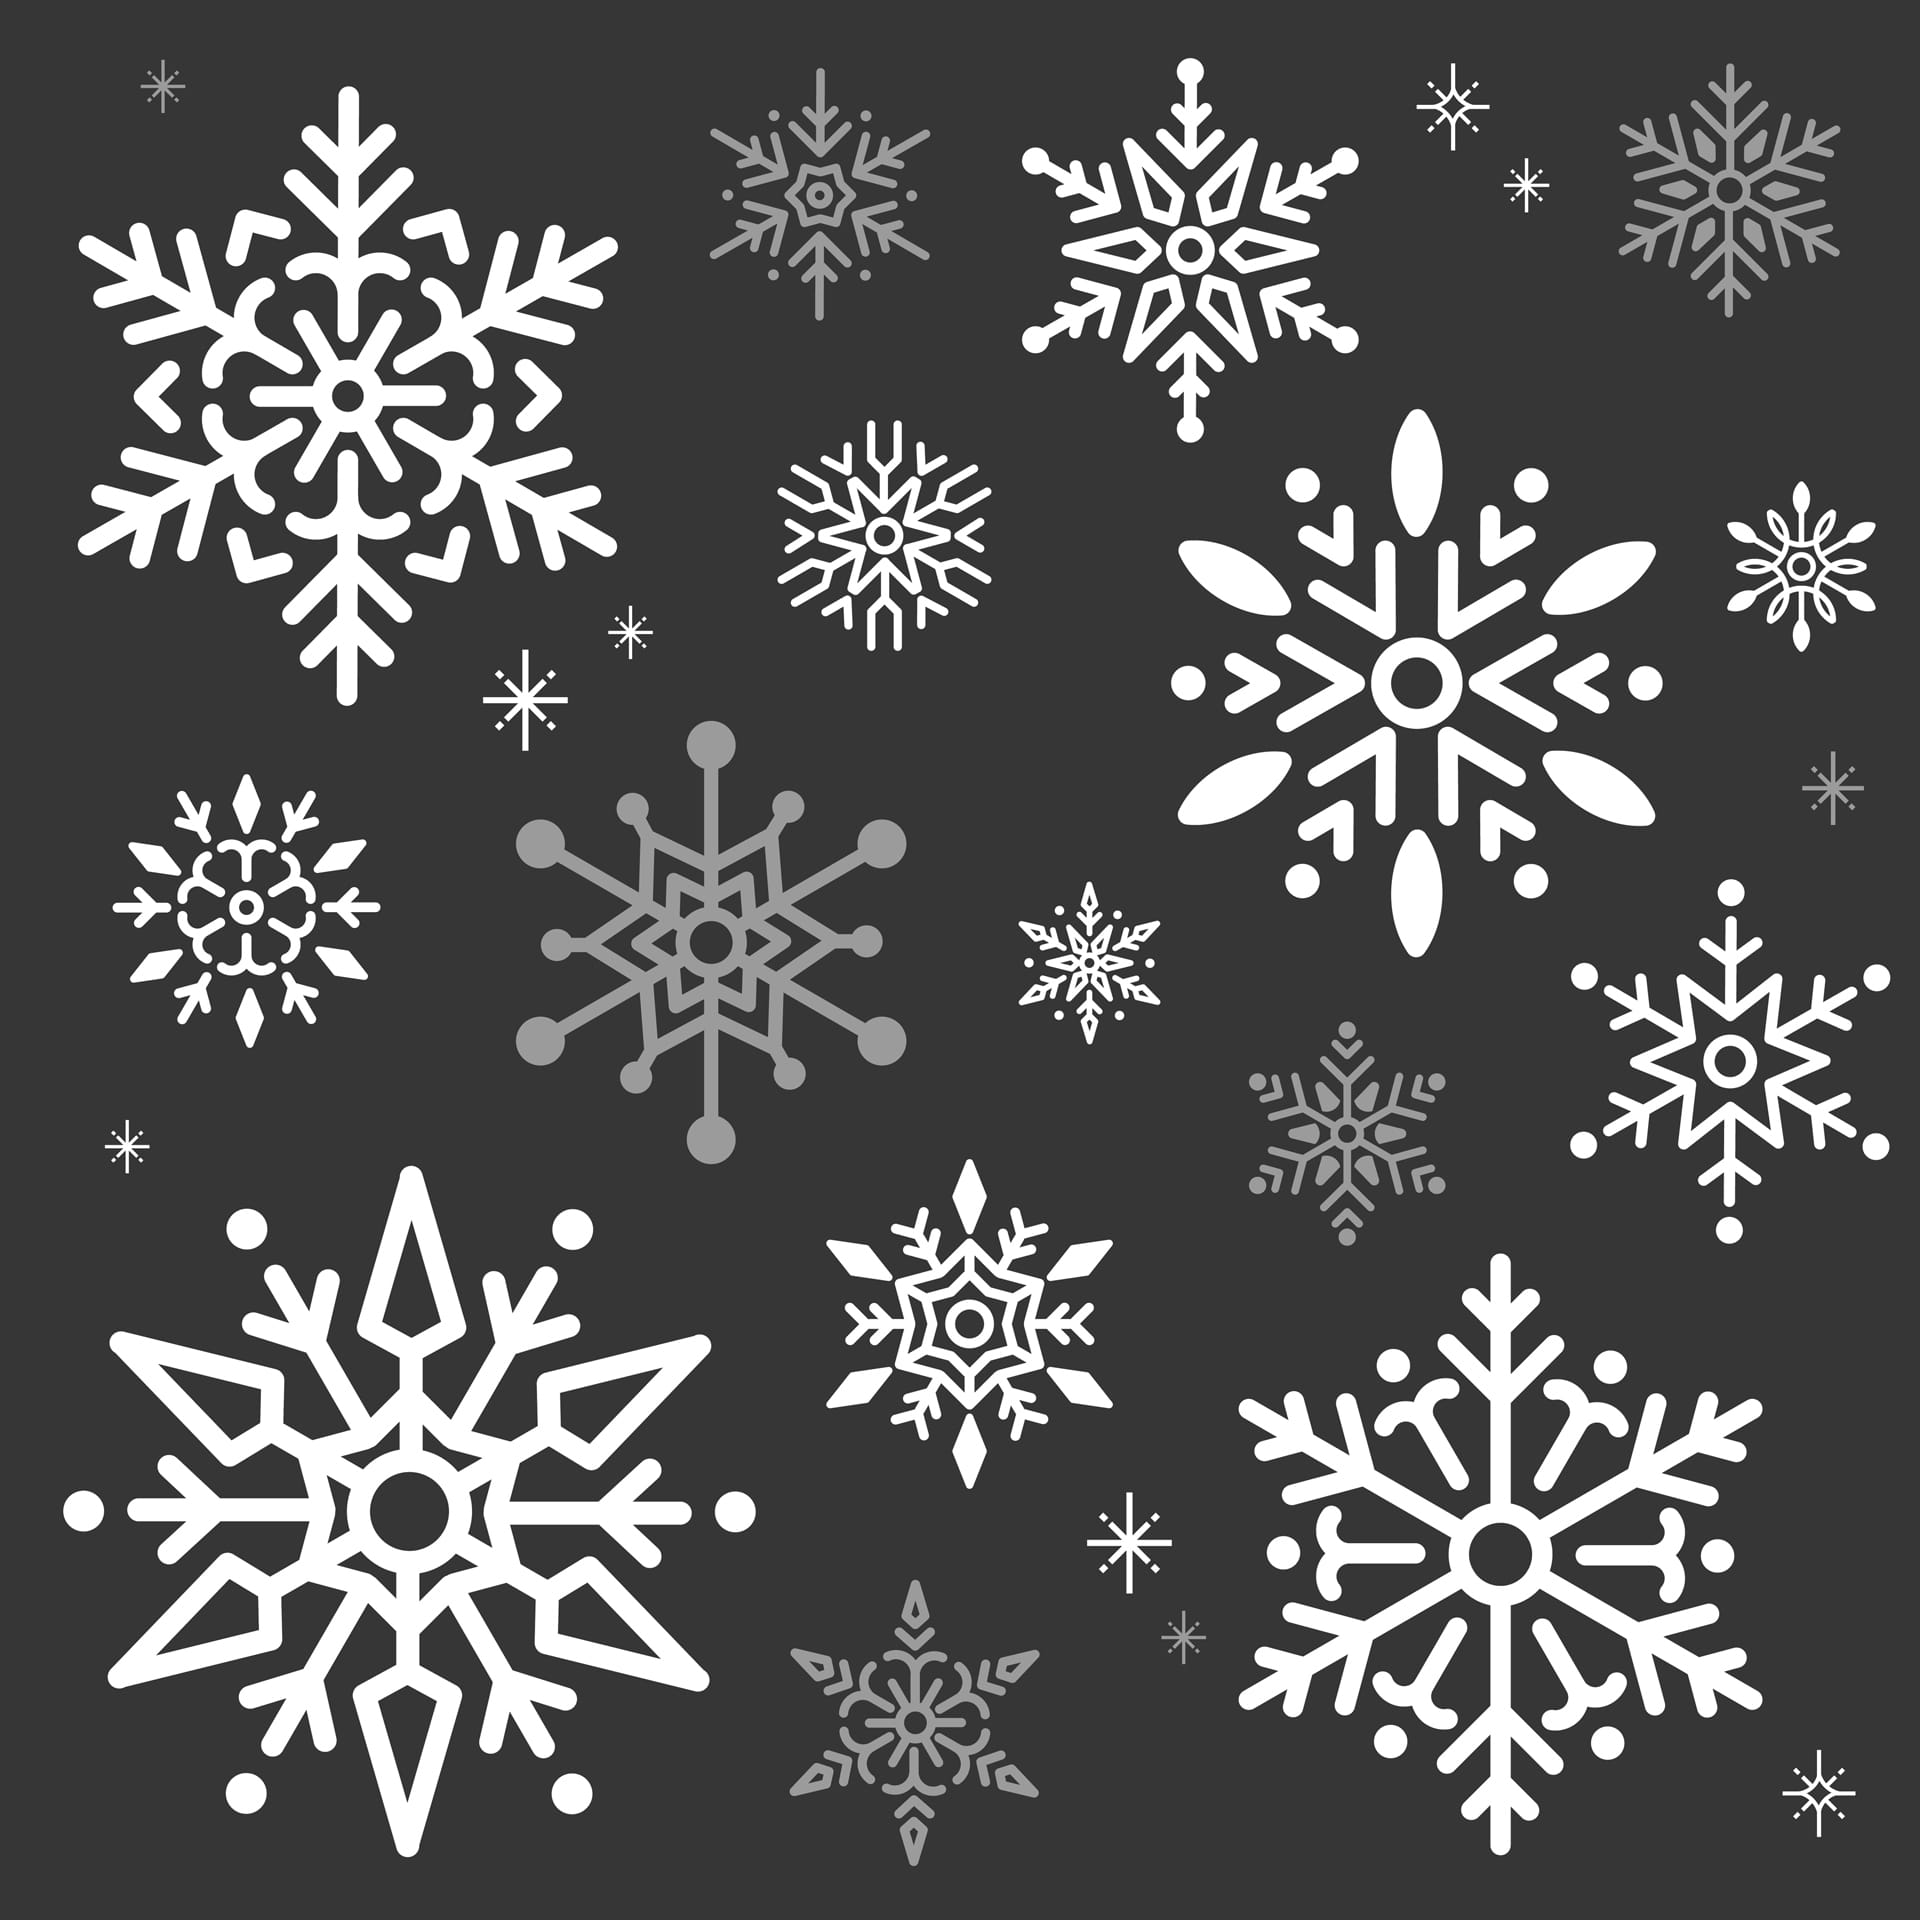 Snowflake christmas design background image